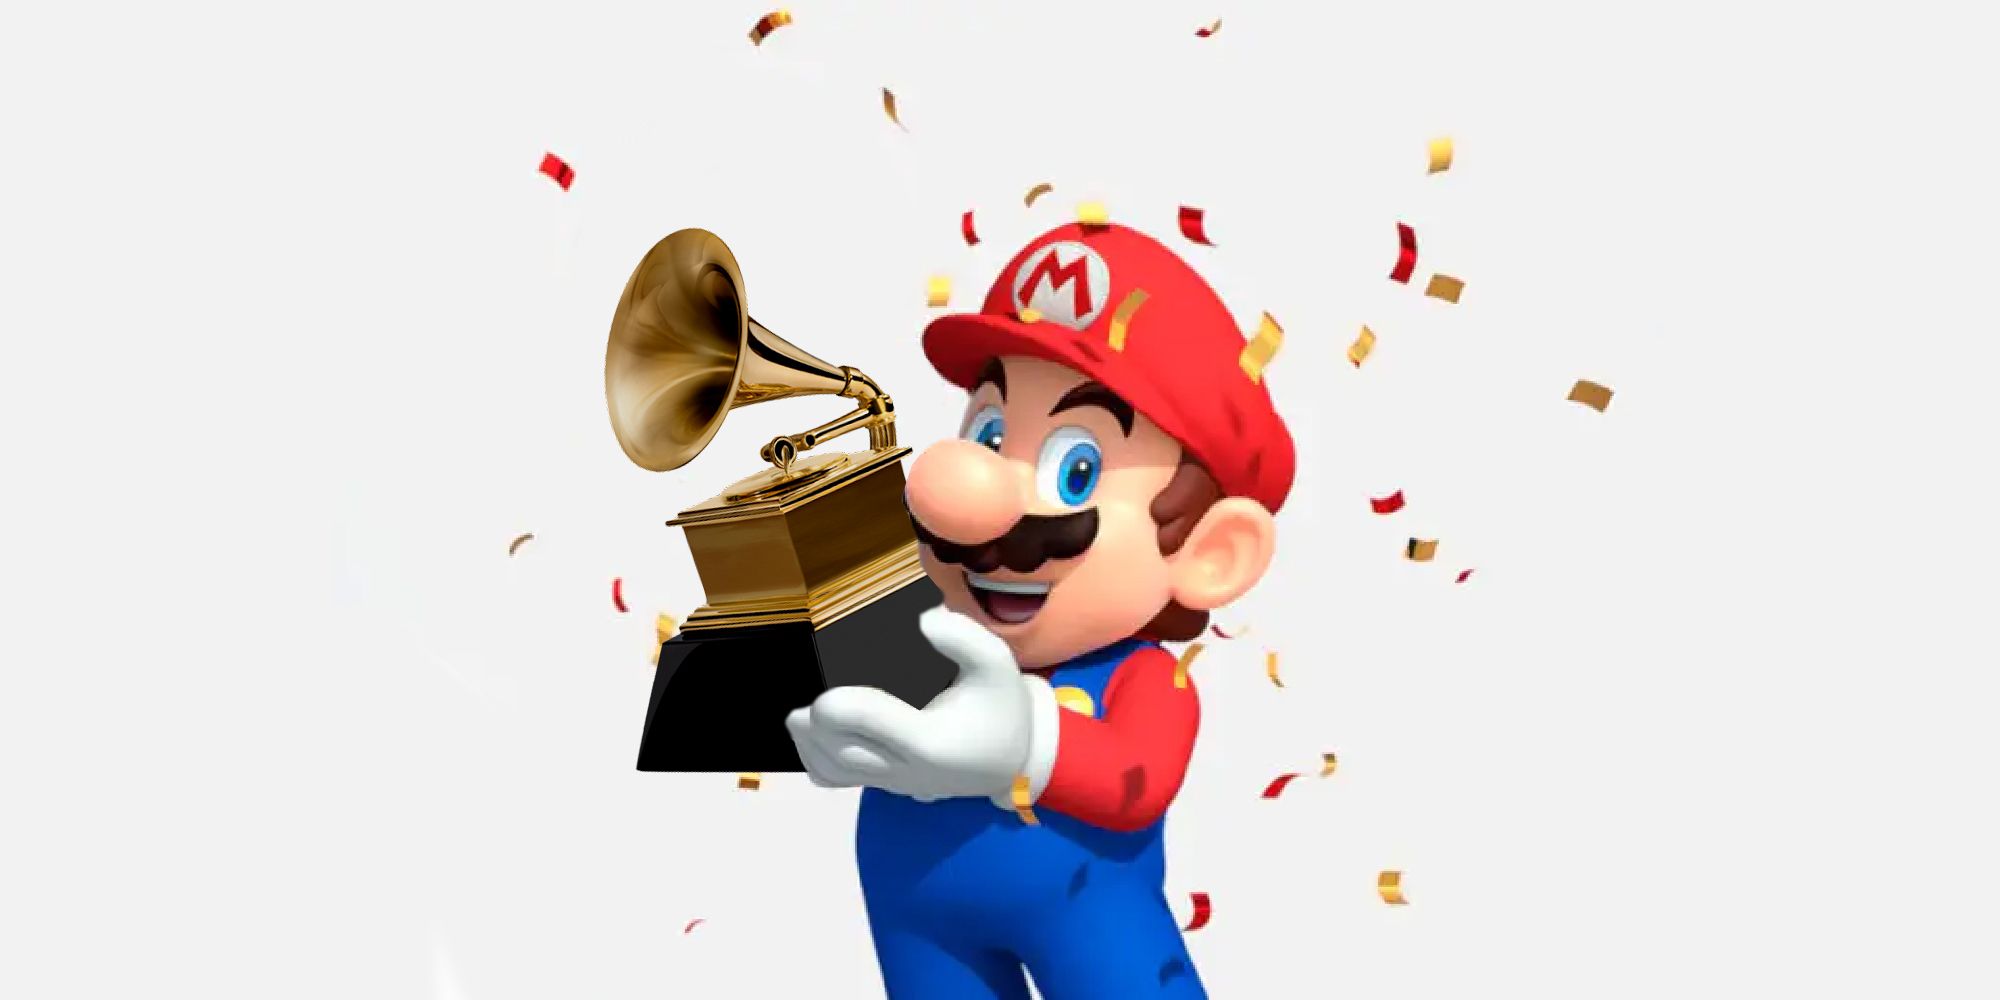 Mario holding a Grammy